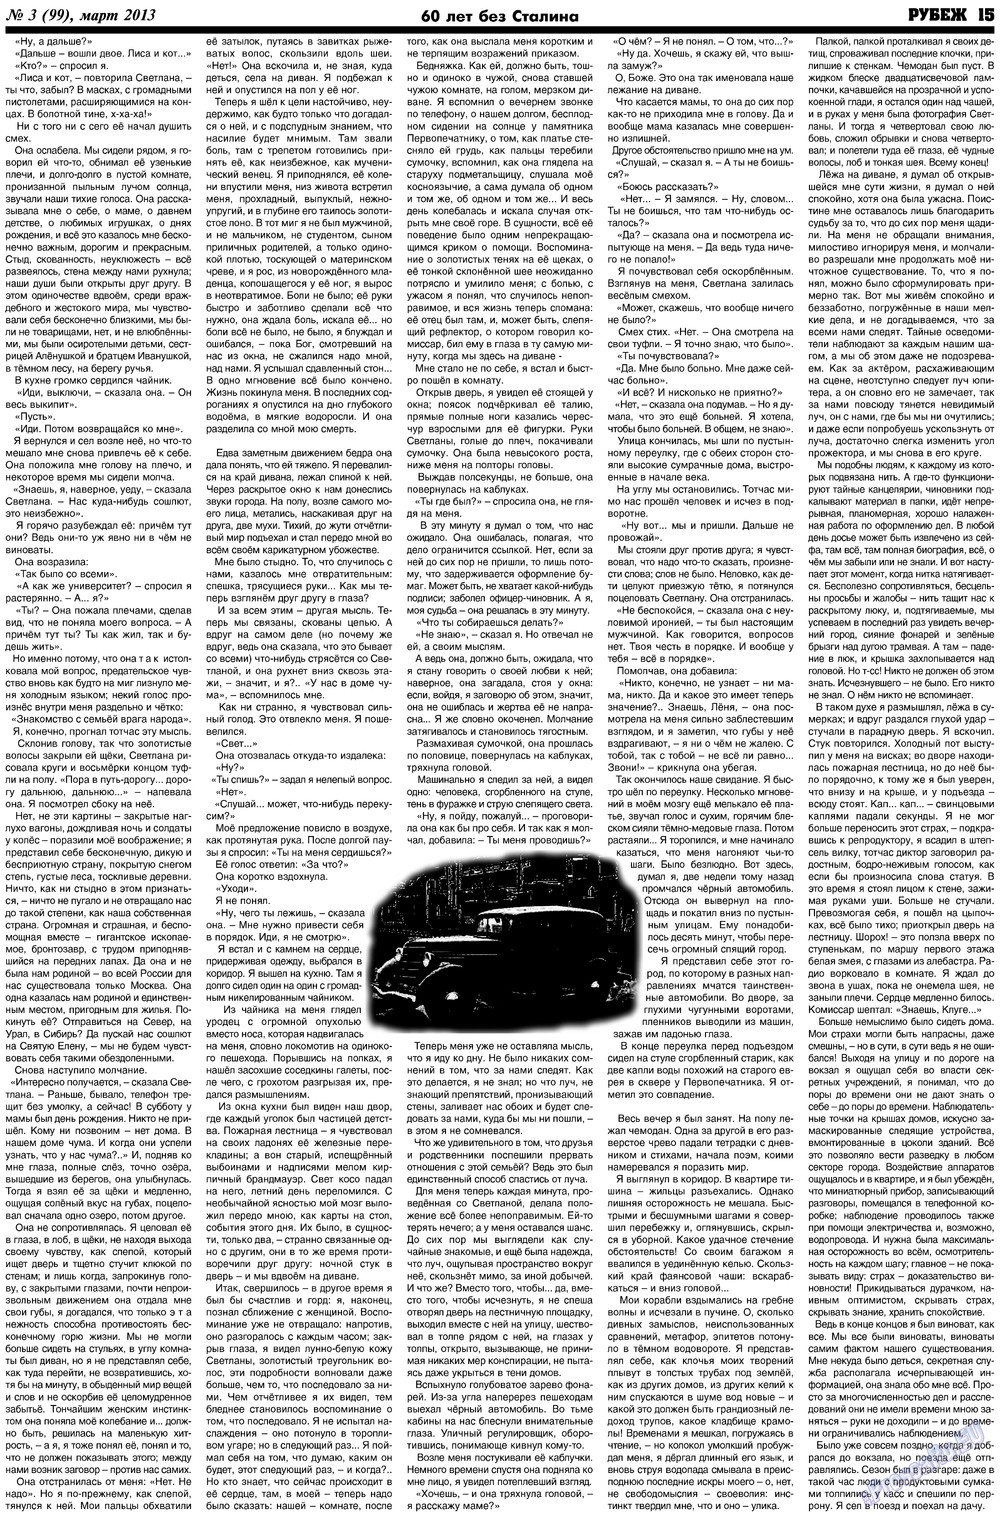 Рубеж, газета. 2013 №3 стр.15